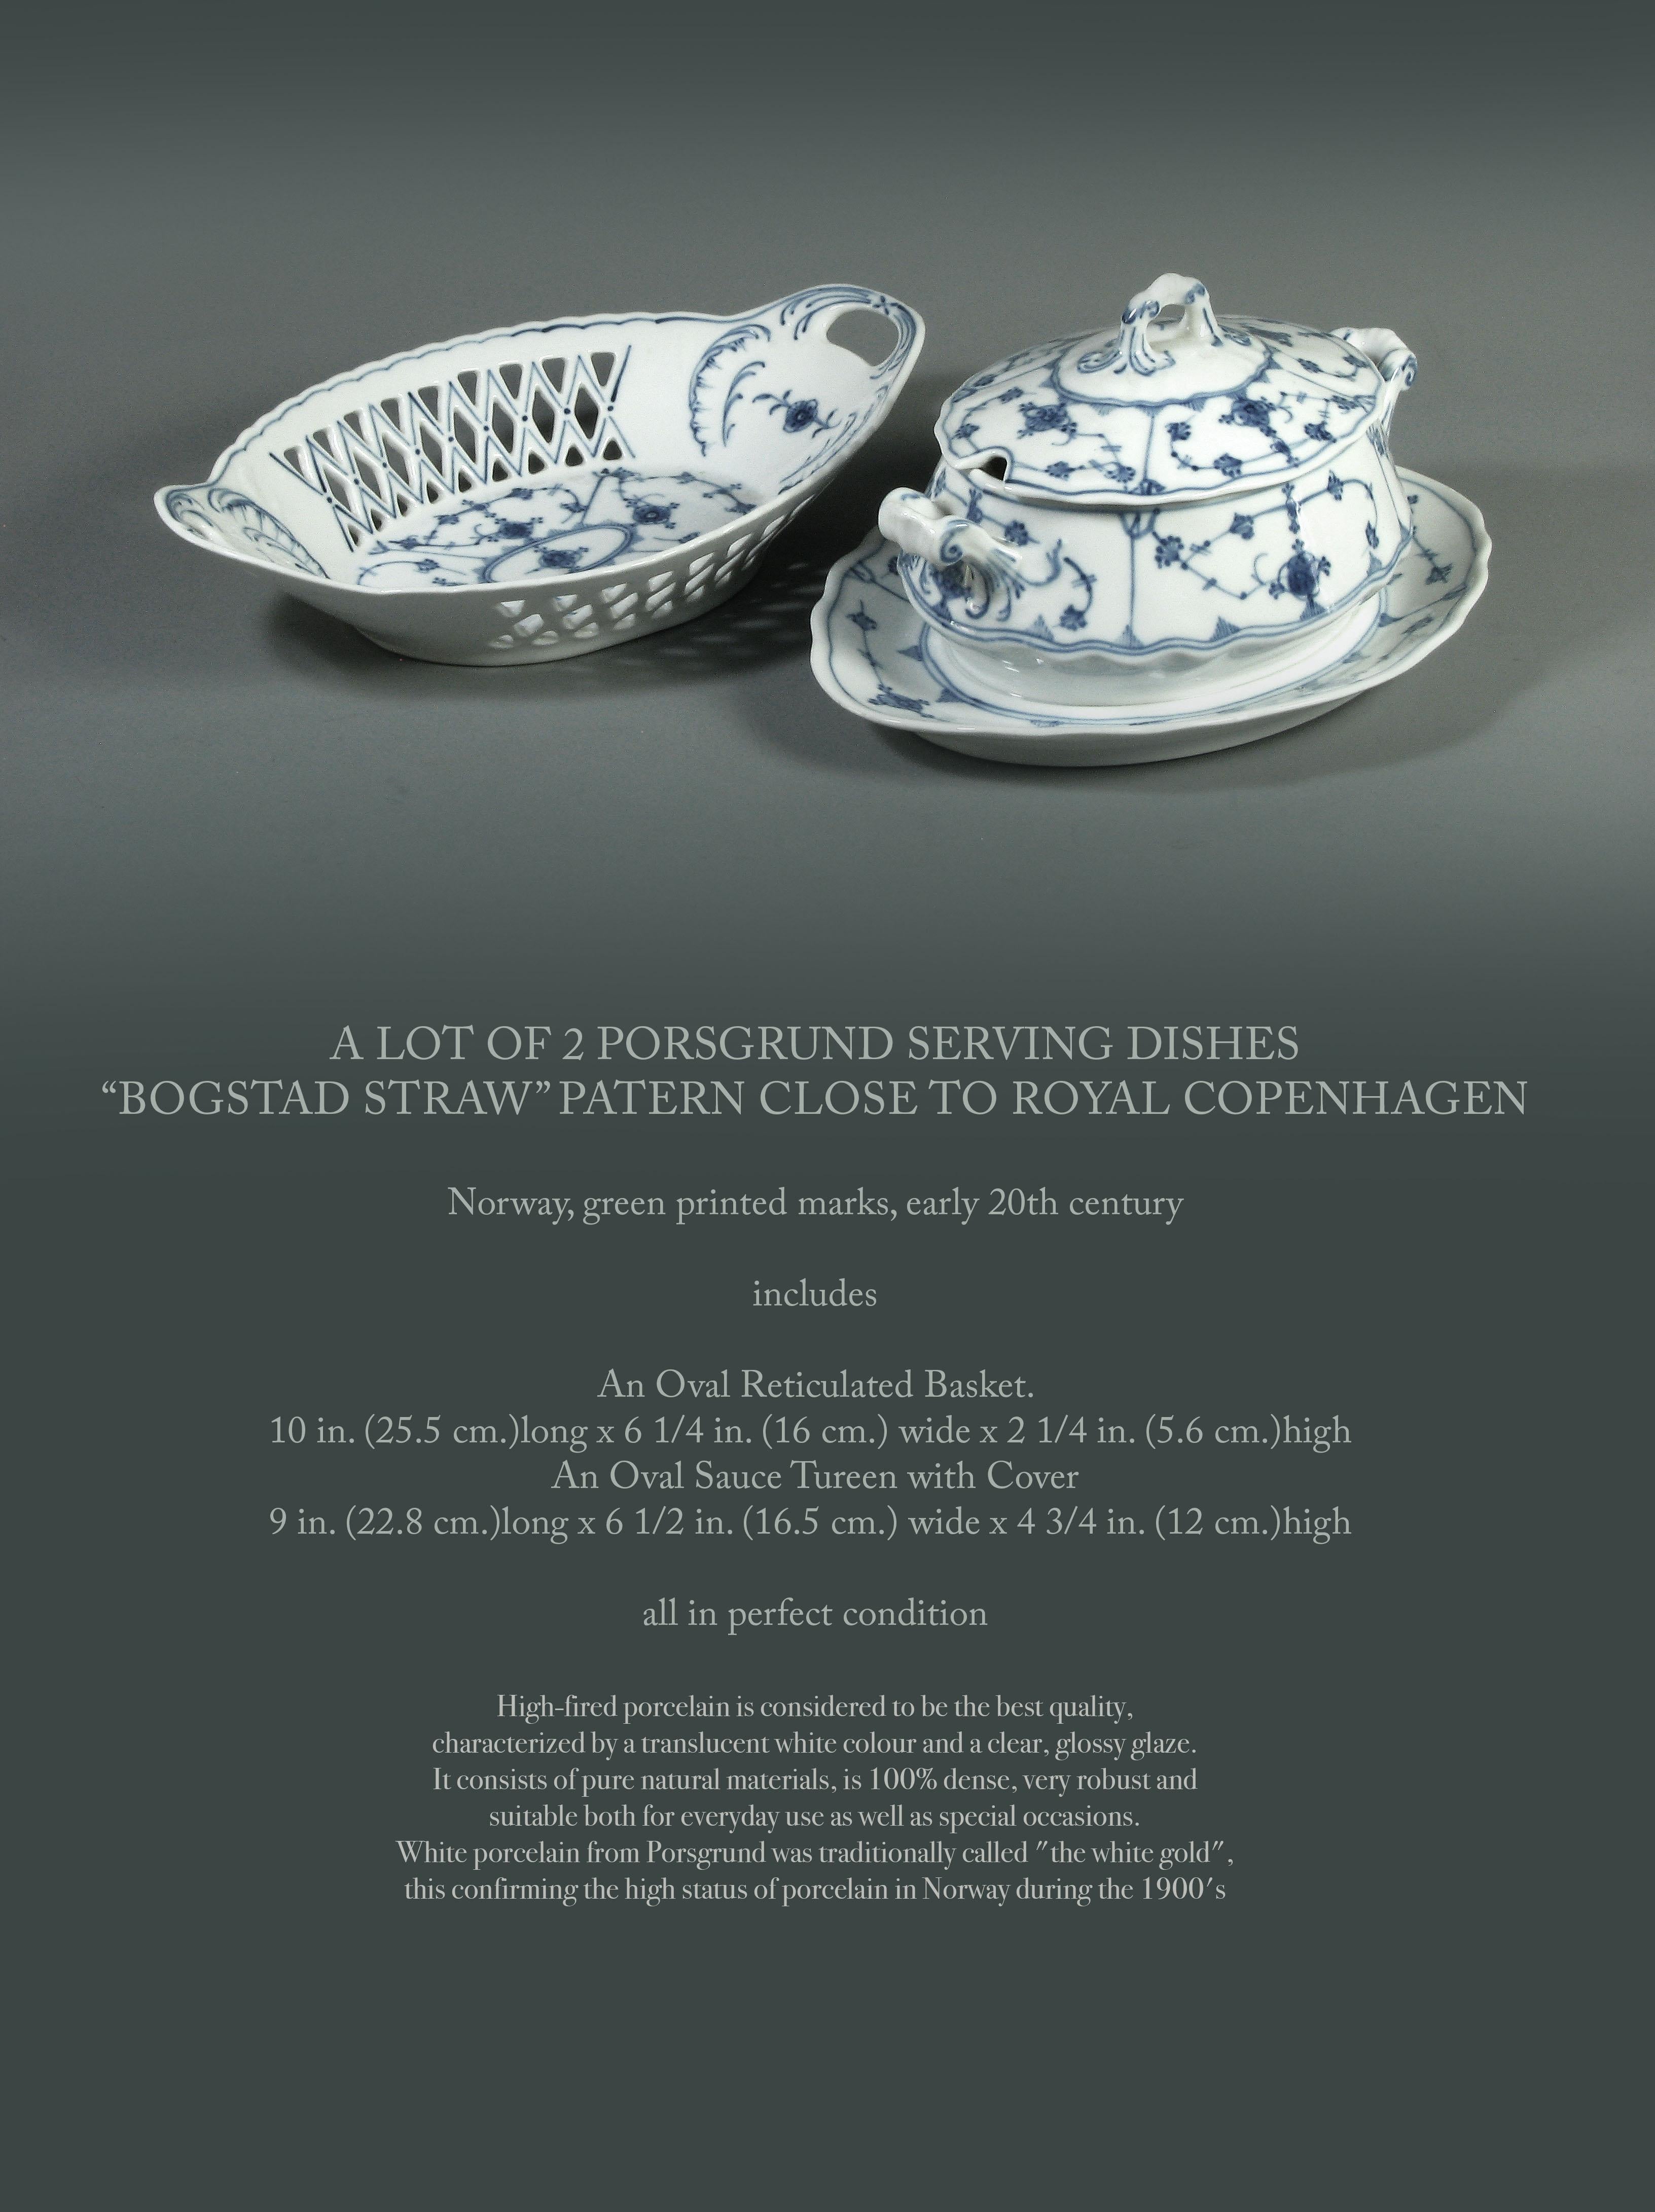 2 Porsgrund Serving Dishes “Bogstad Straw” patern close to Royal Copenhagen For Sale 3